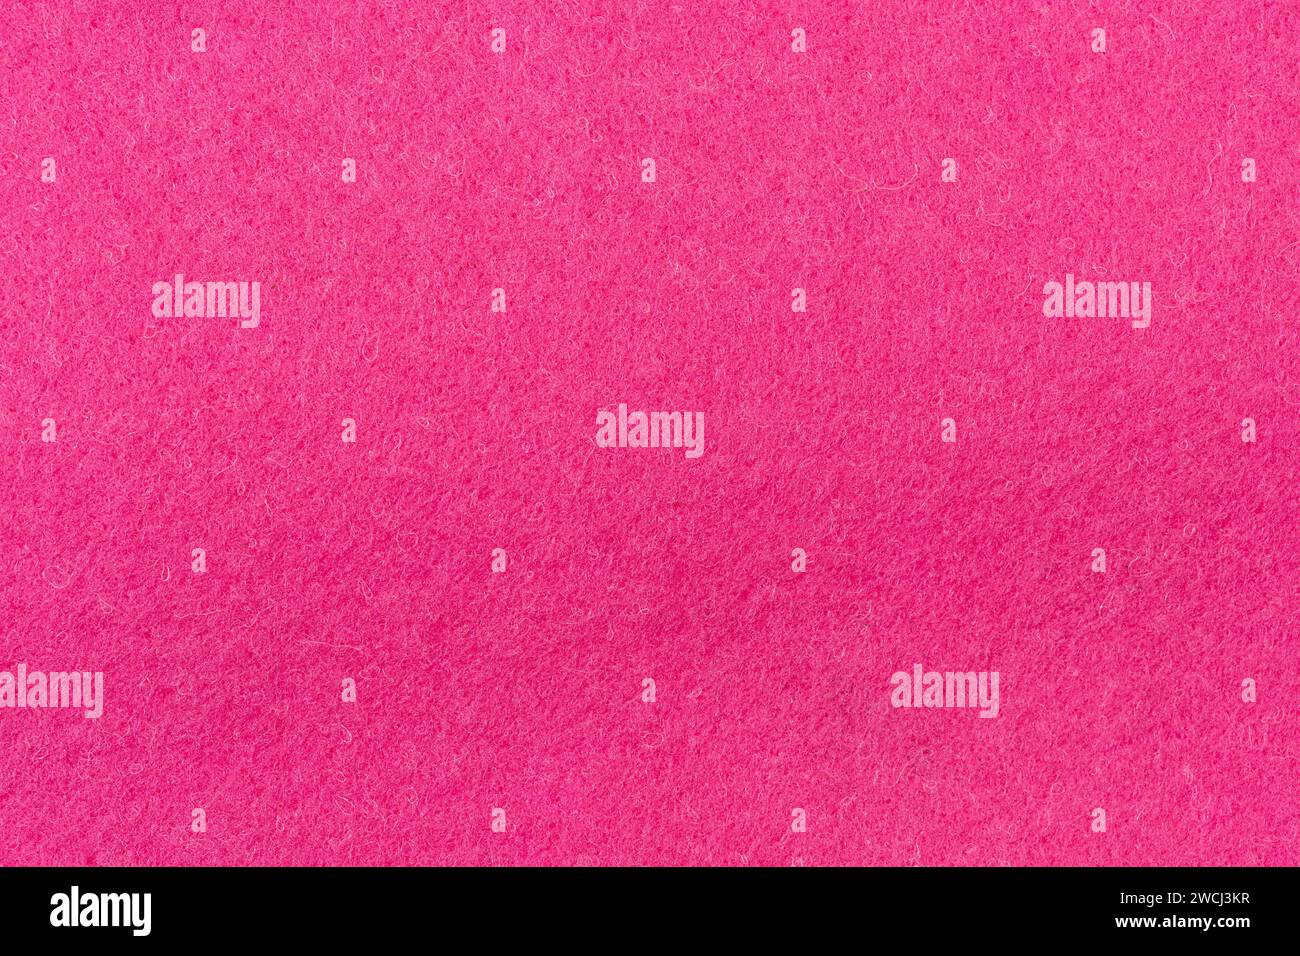 Pink Felt fabric background texture. Full frame Stock Photo